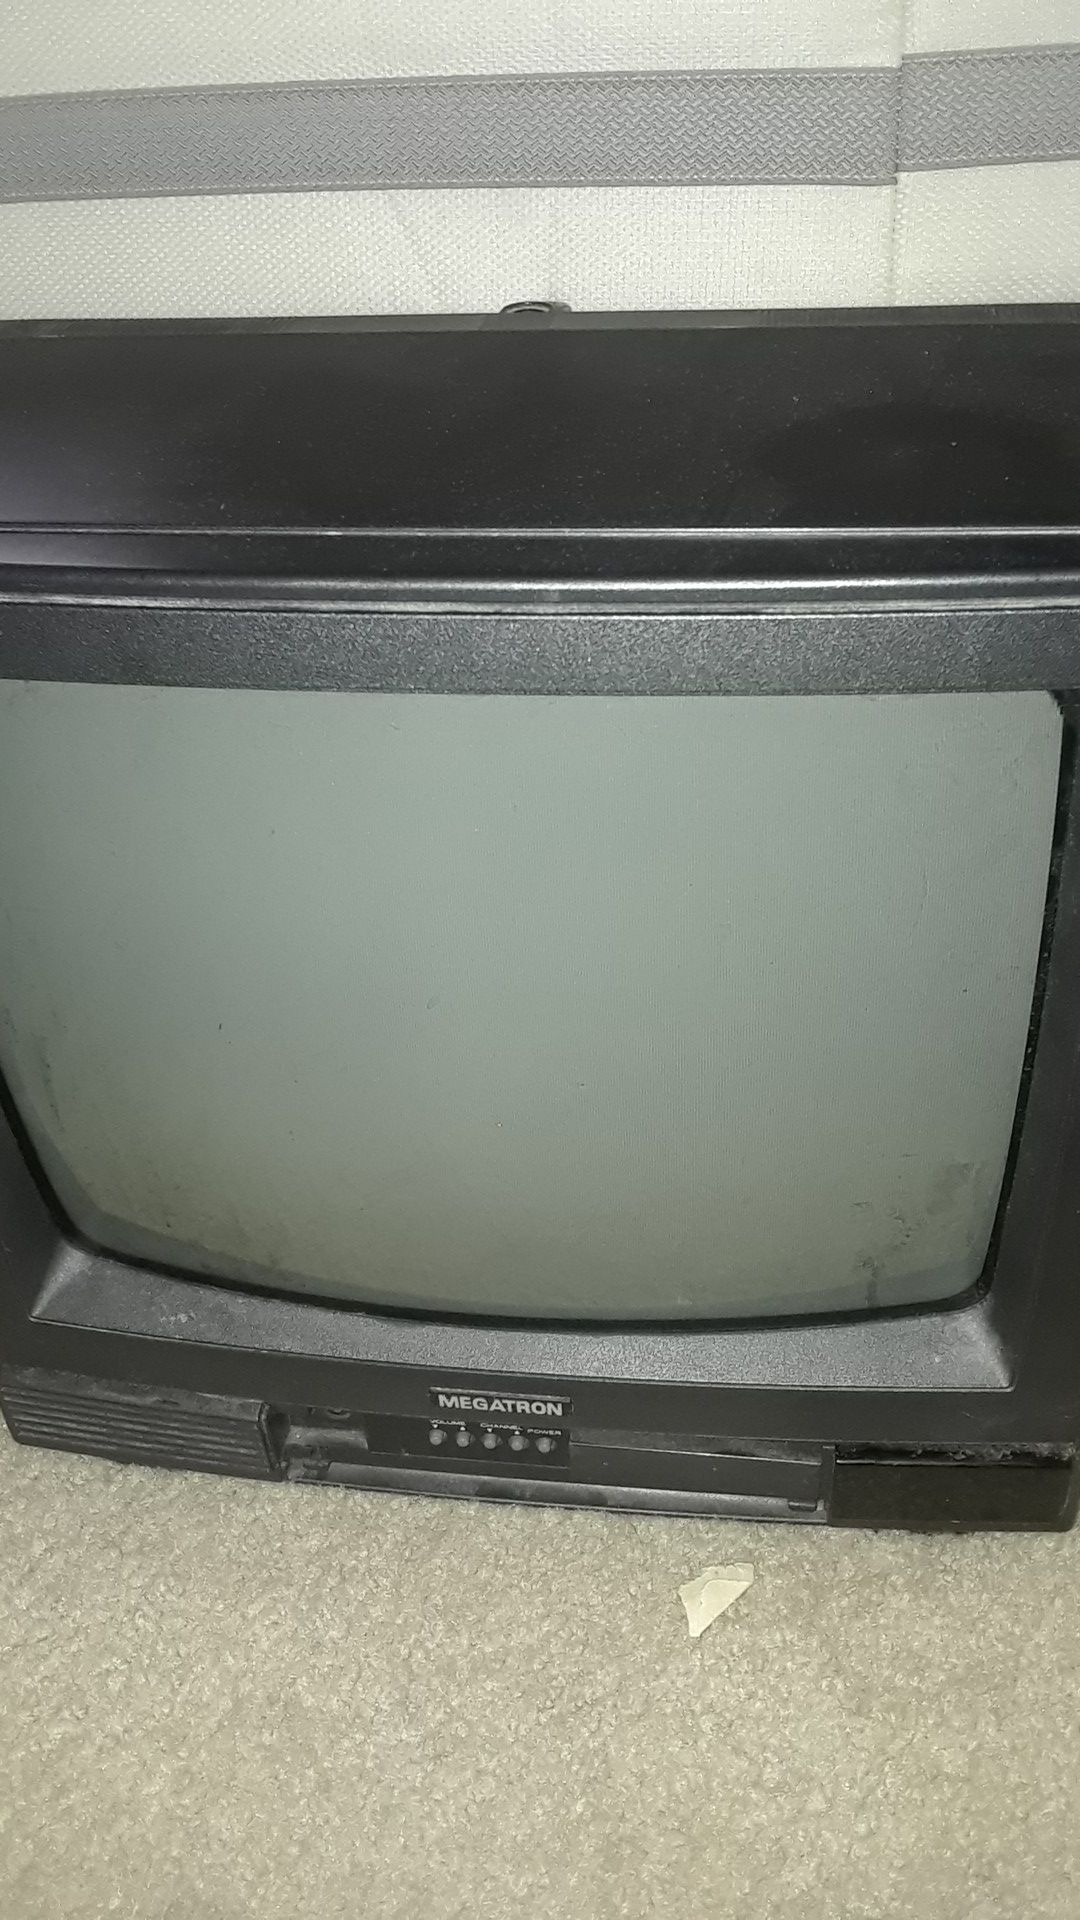 Vintage tv for free